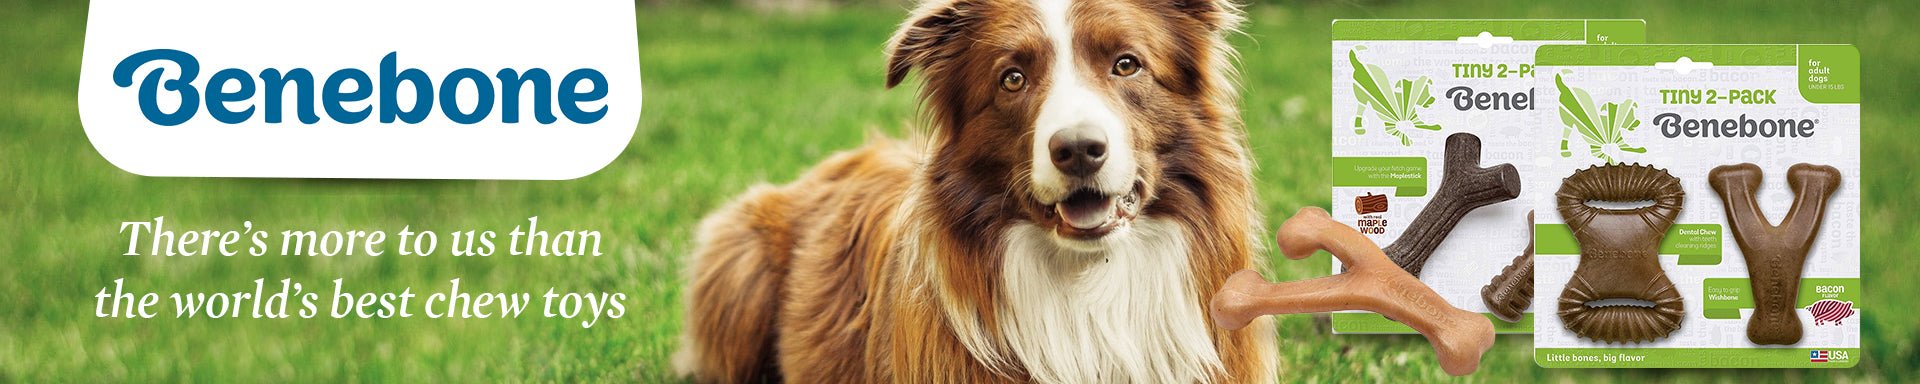 Benebone Dog Chews | The Pets Club